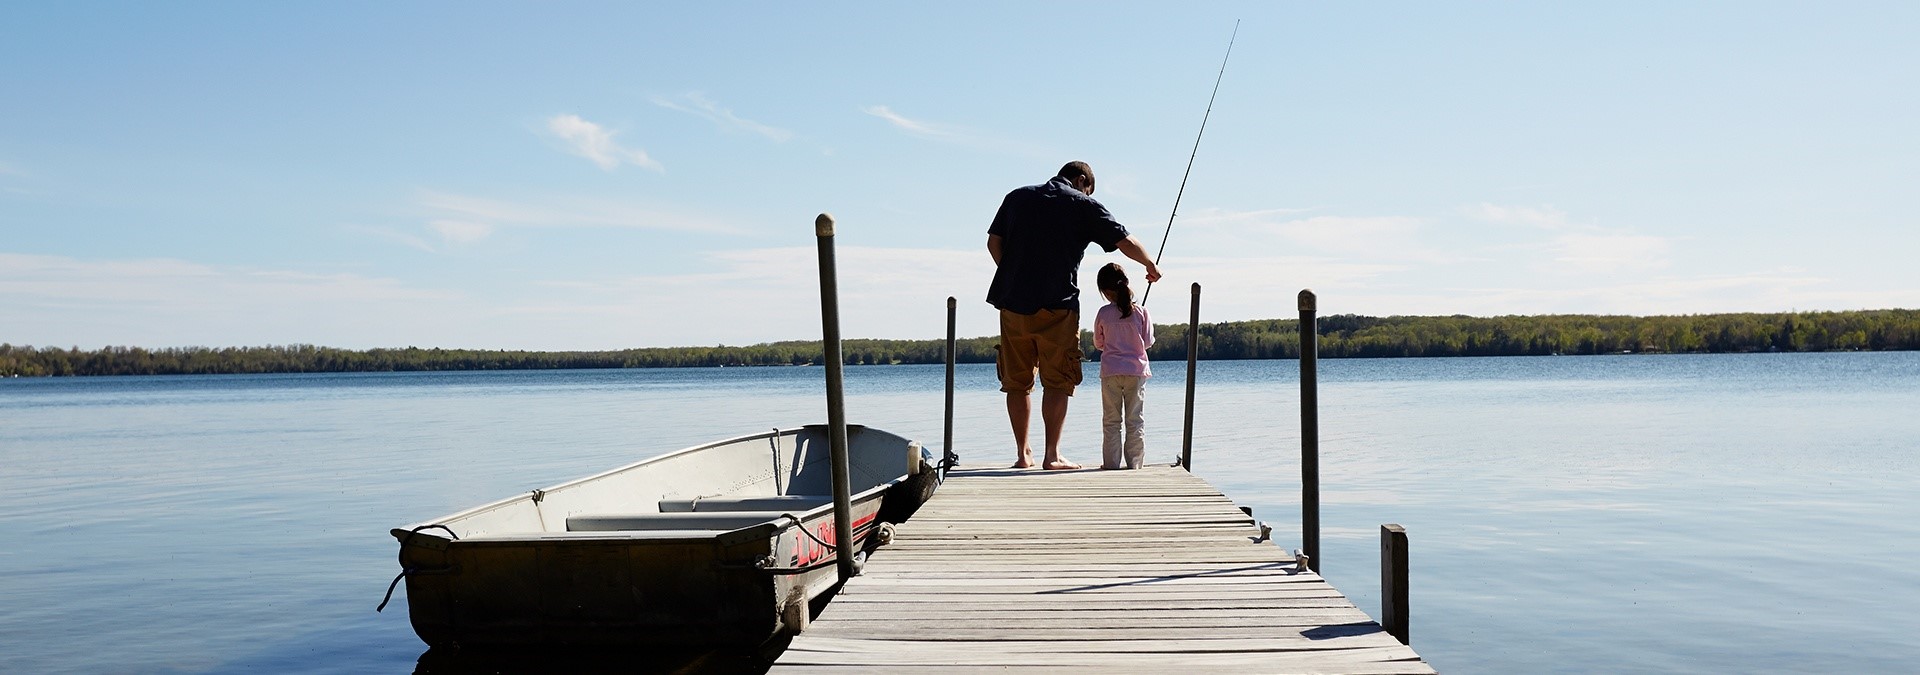 Detroit Lake Fishing Guide - The Outdoorsman Fishing Lakes